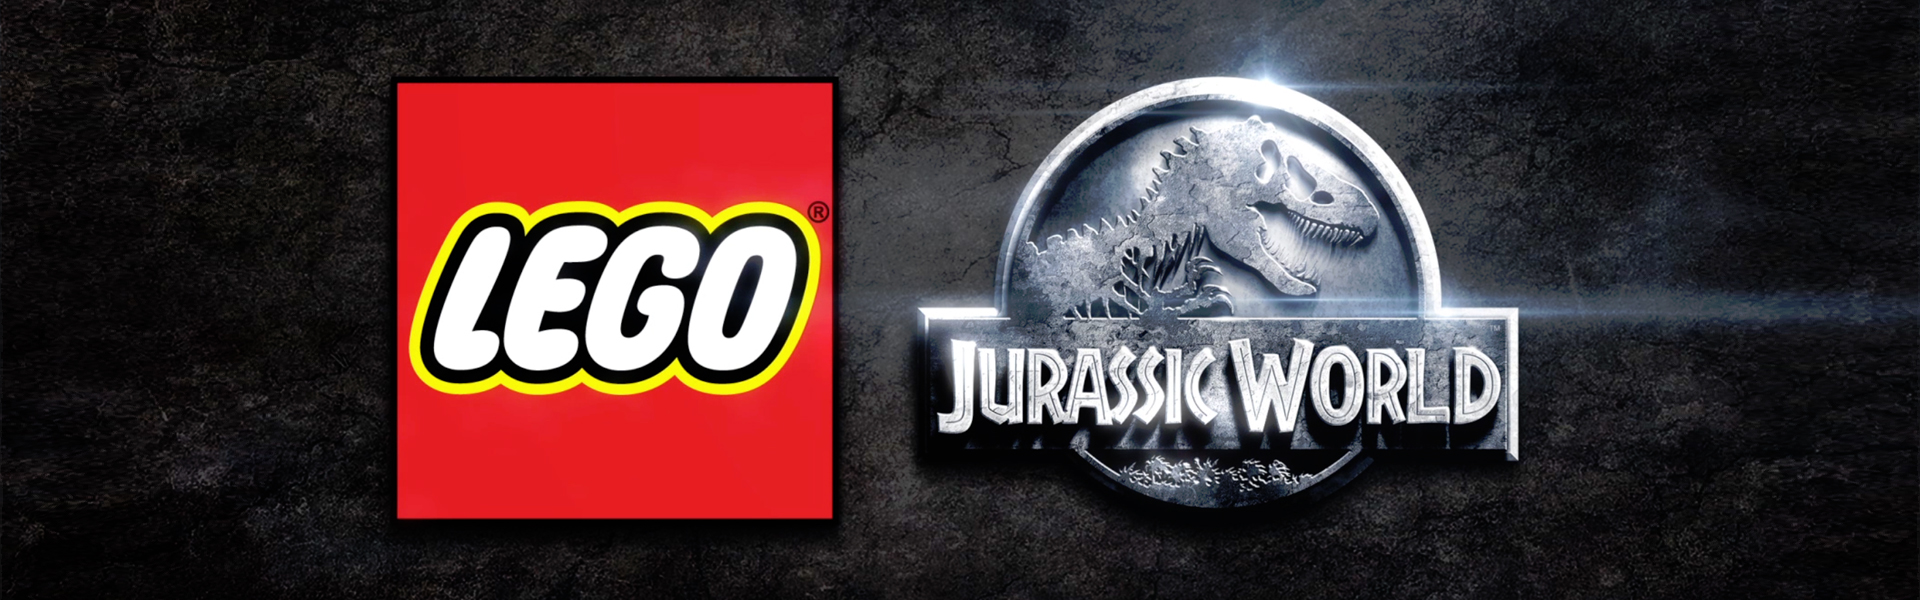 https://robwestwood.com/wp-content/uploads/2013/01/Jurassic-World-Banner.jpg